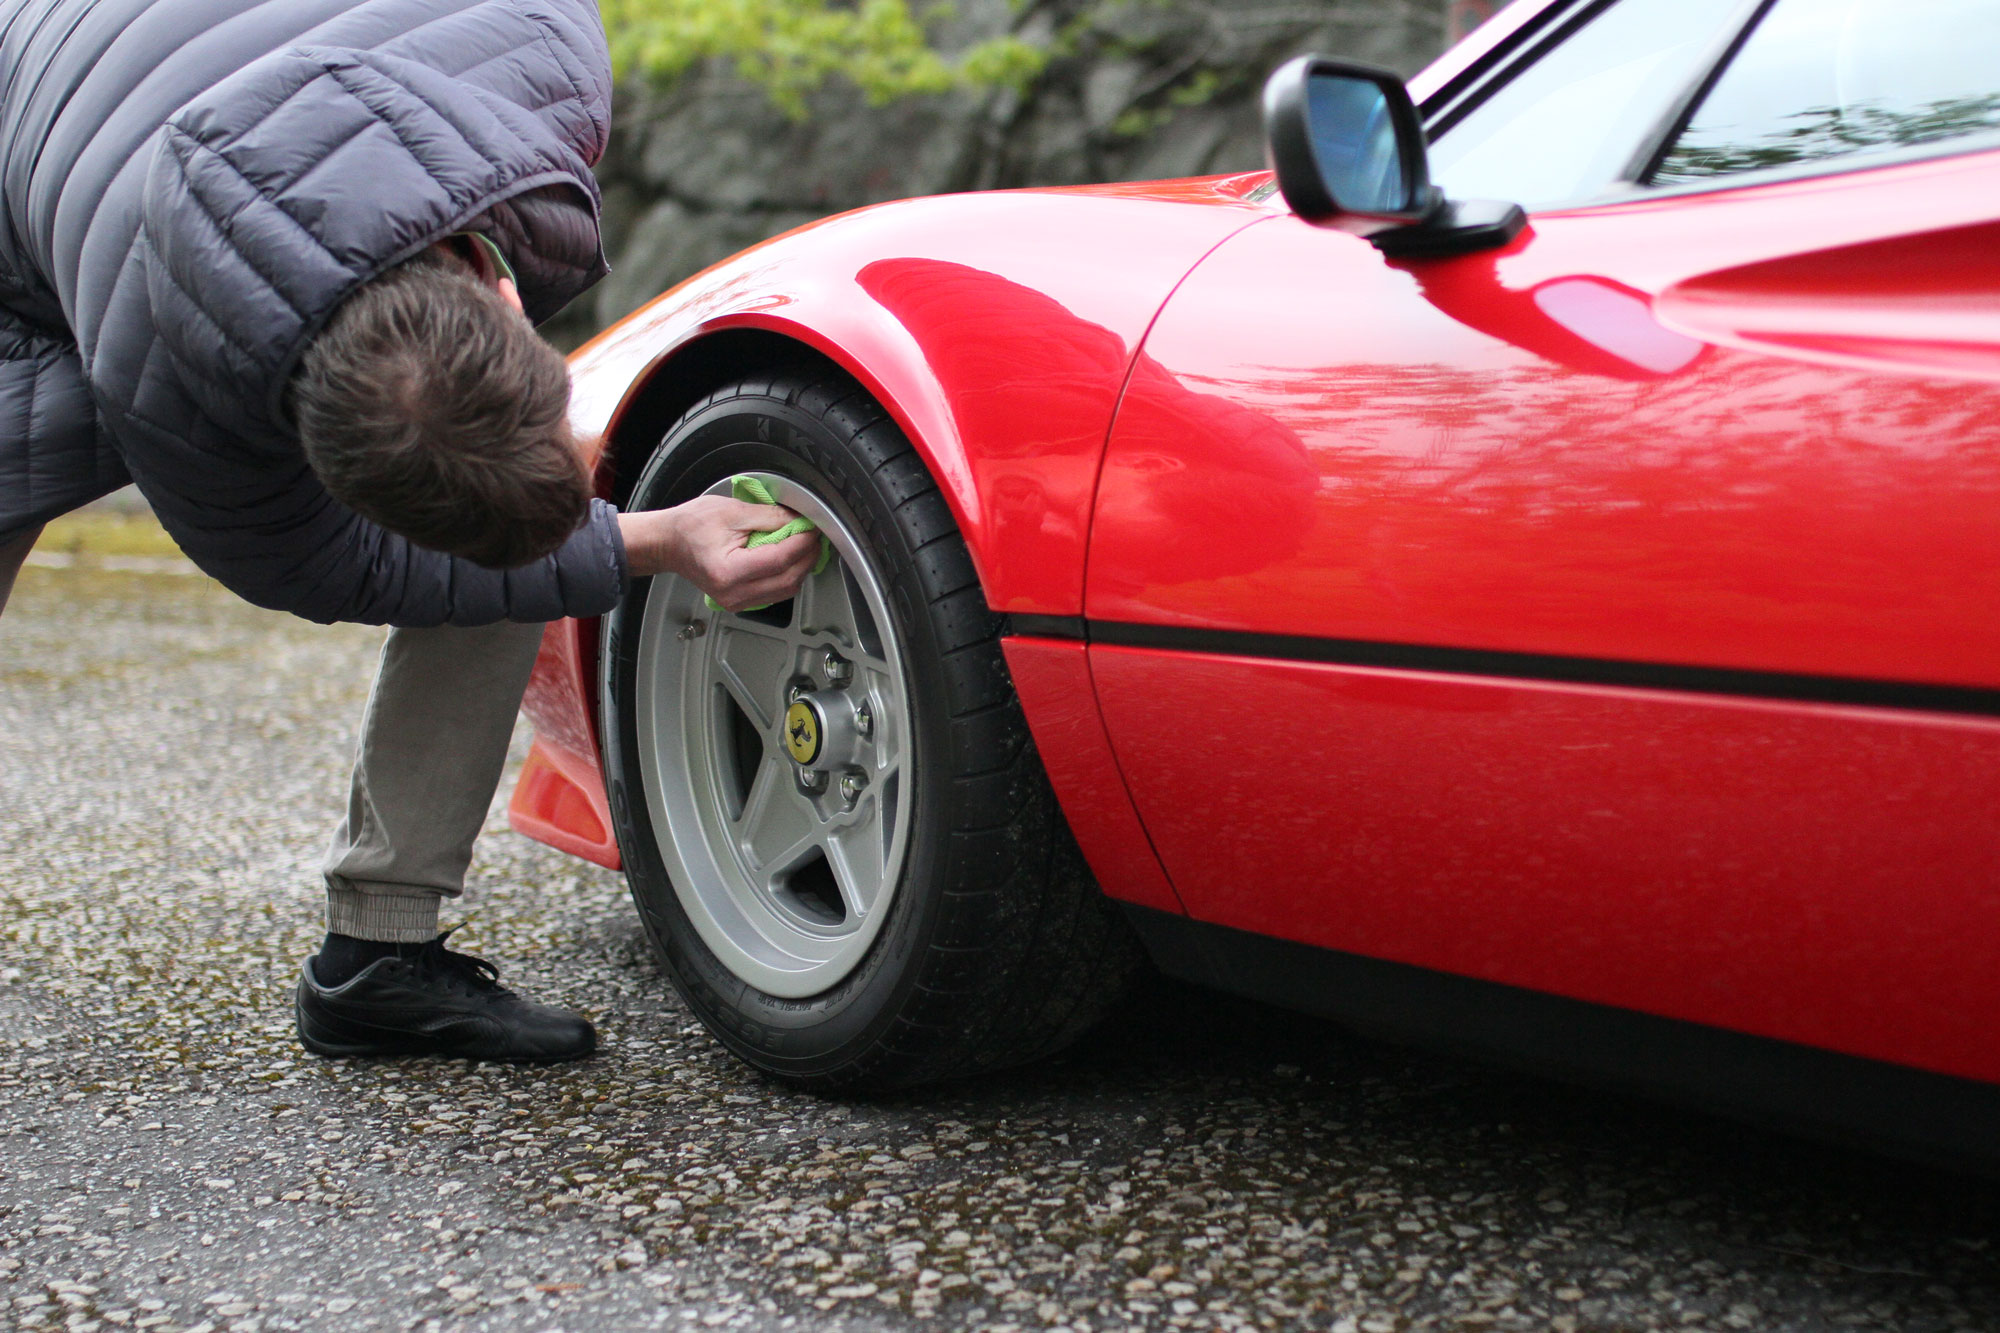 Torbjörn is polishing the rims of the Ferrari 308 